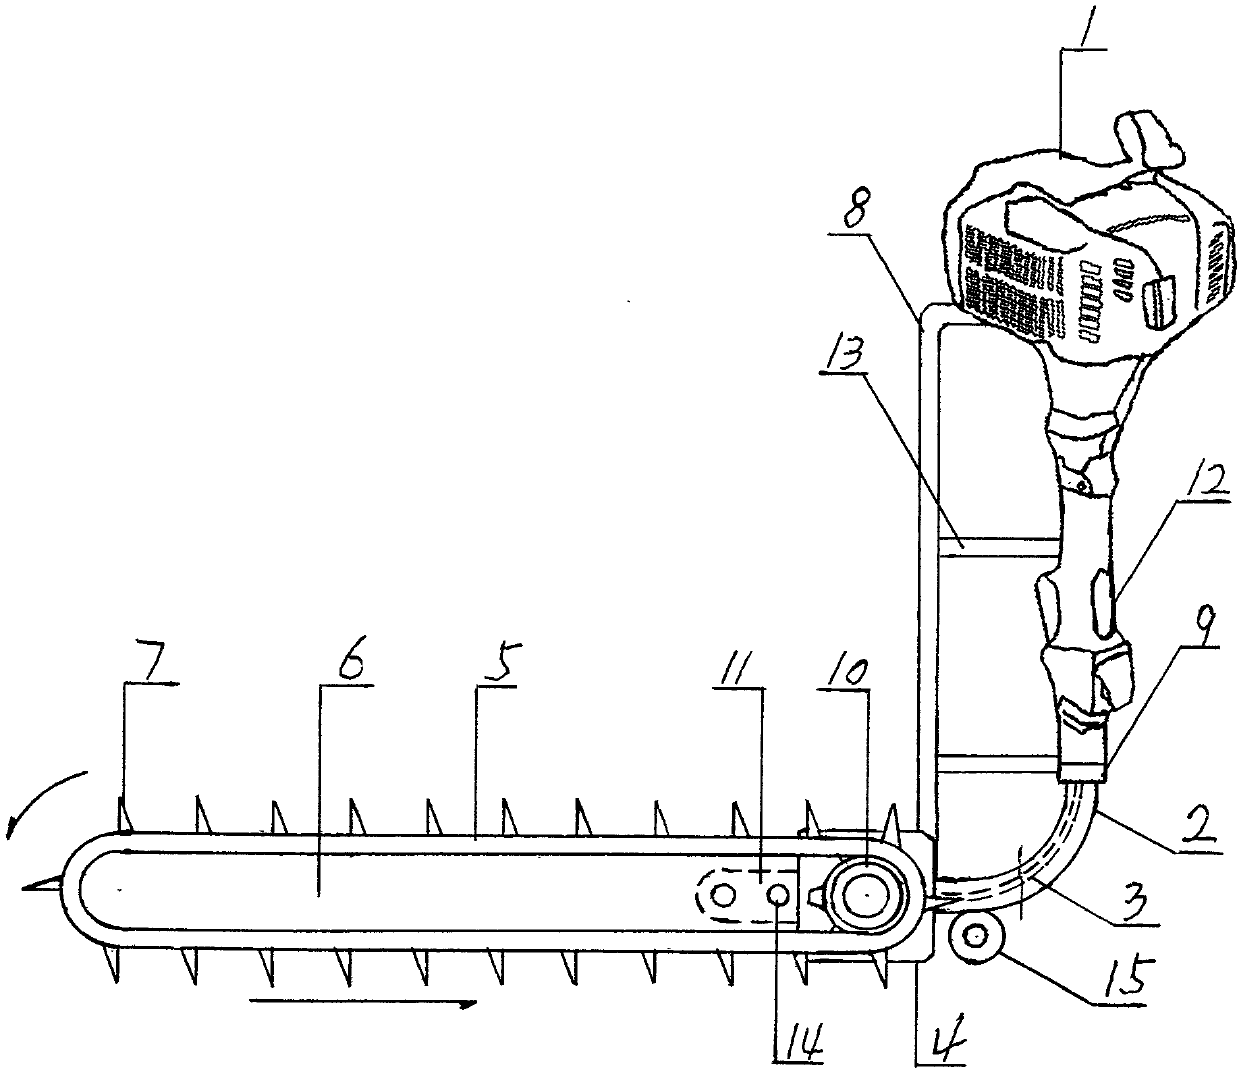 Manufacturing method for chain saw type rail crawler loader